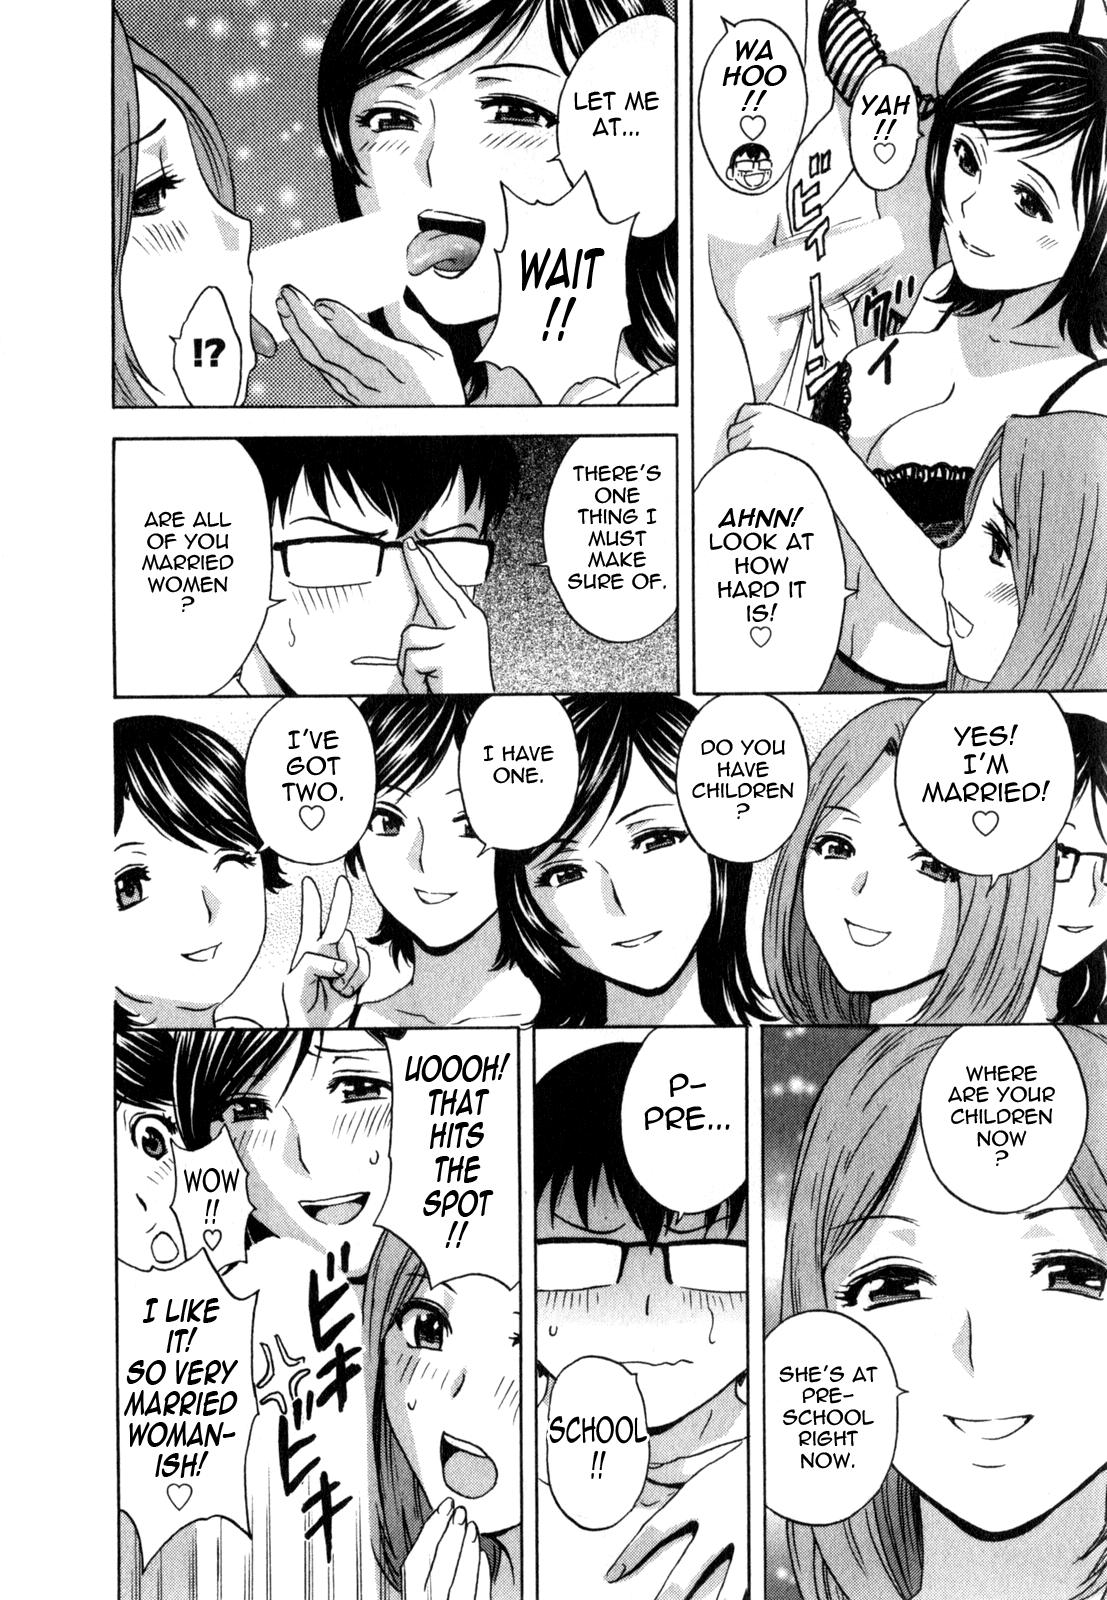 [Hidemaru] Life with Married Women Just Like a Manga 3 - Ch. 1-7 [English] {Tadanohito} 131